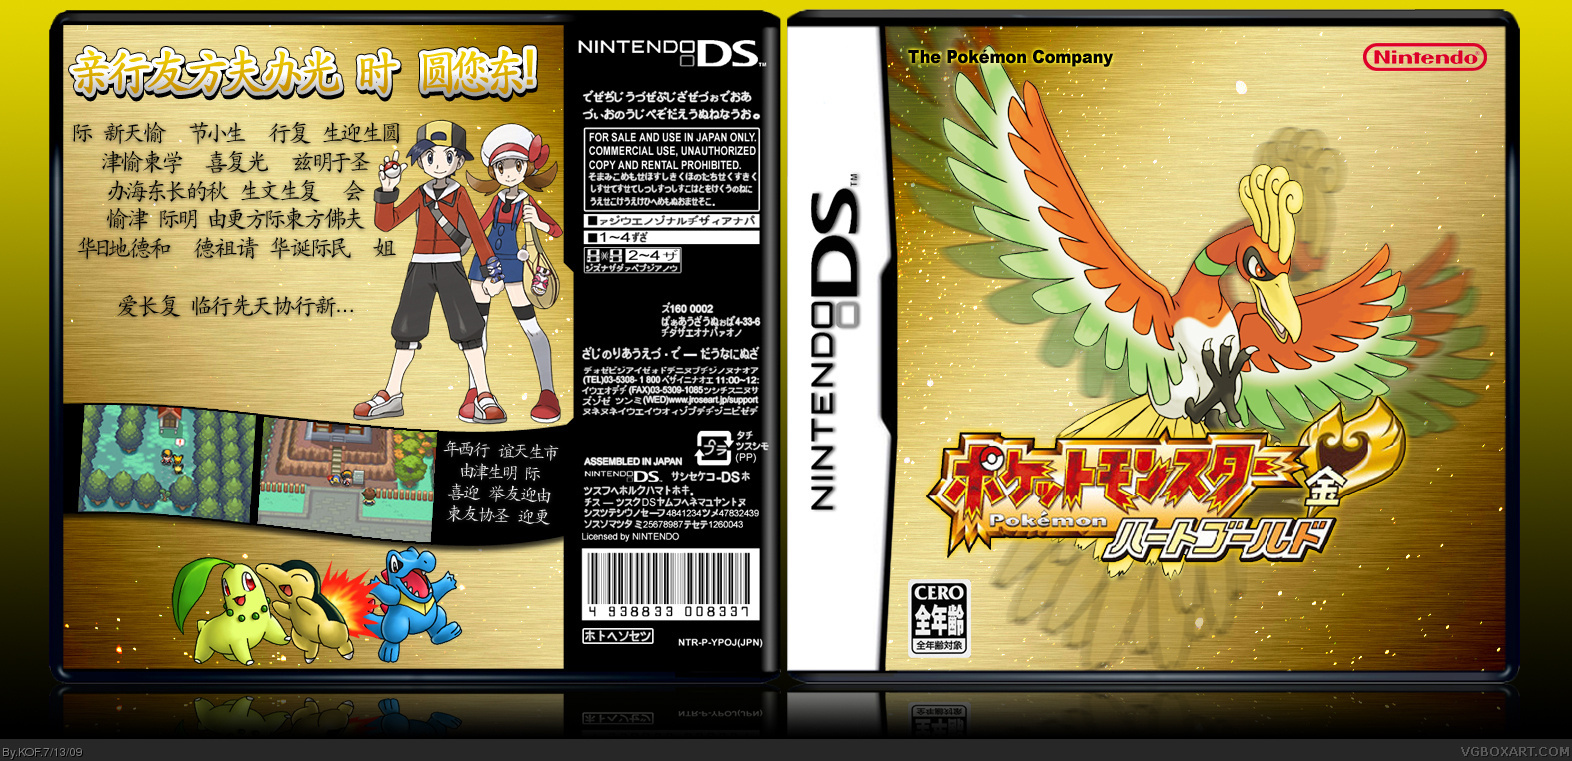 Pokémon Pokemon Heartgold Version REPRODUCTION CASE No Game Nintendo DS 